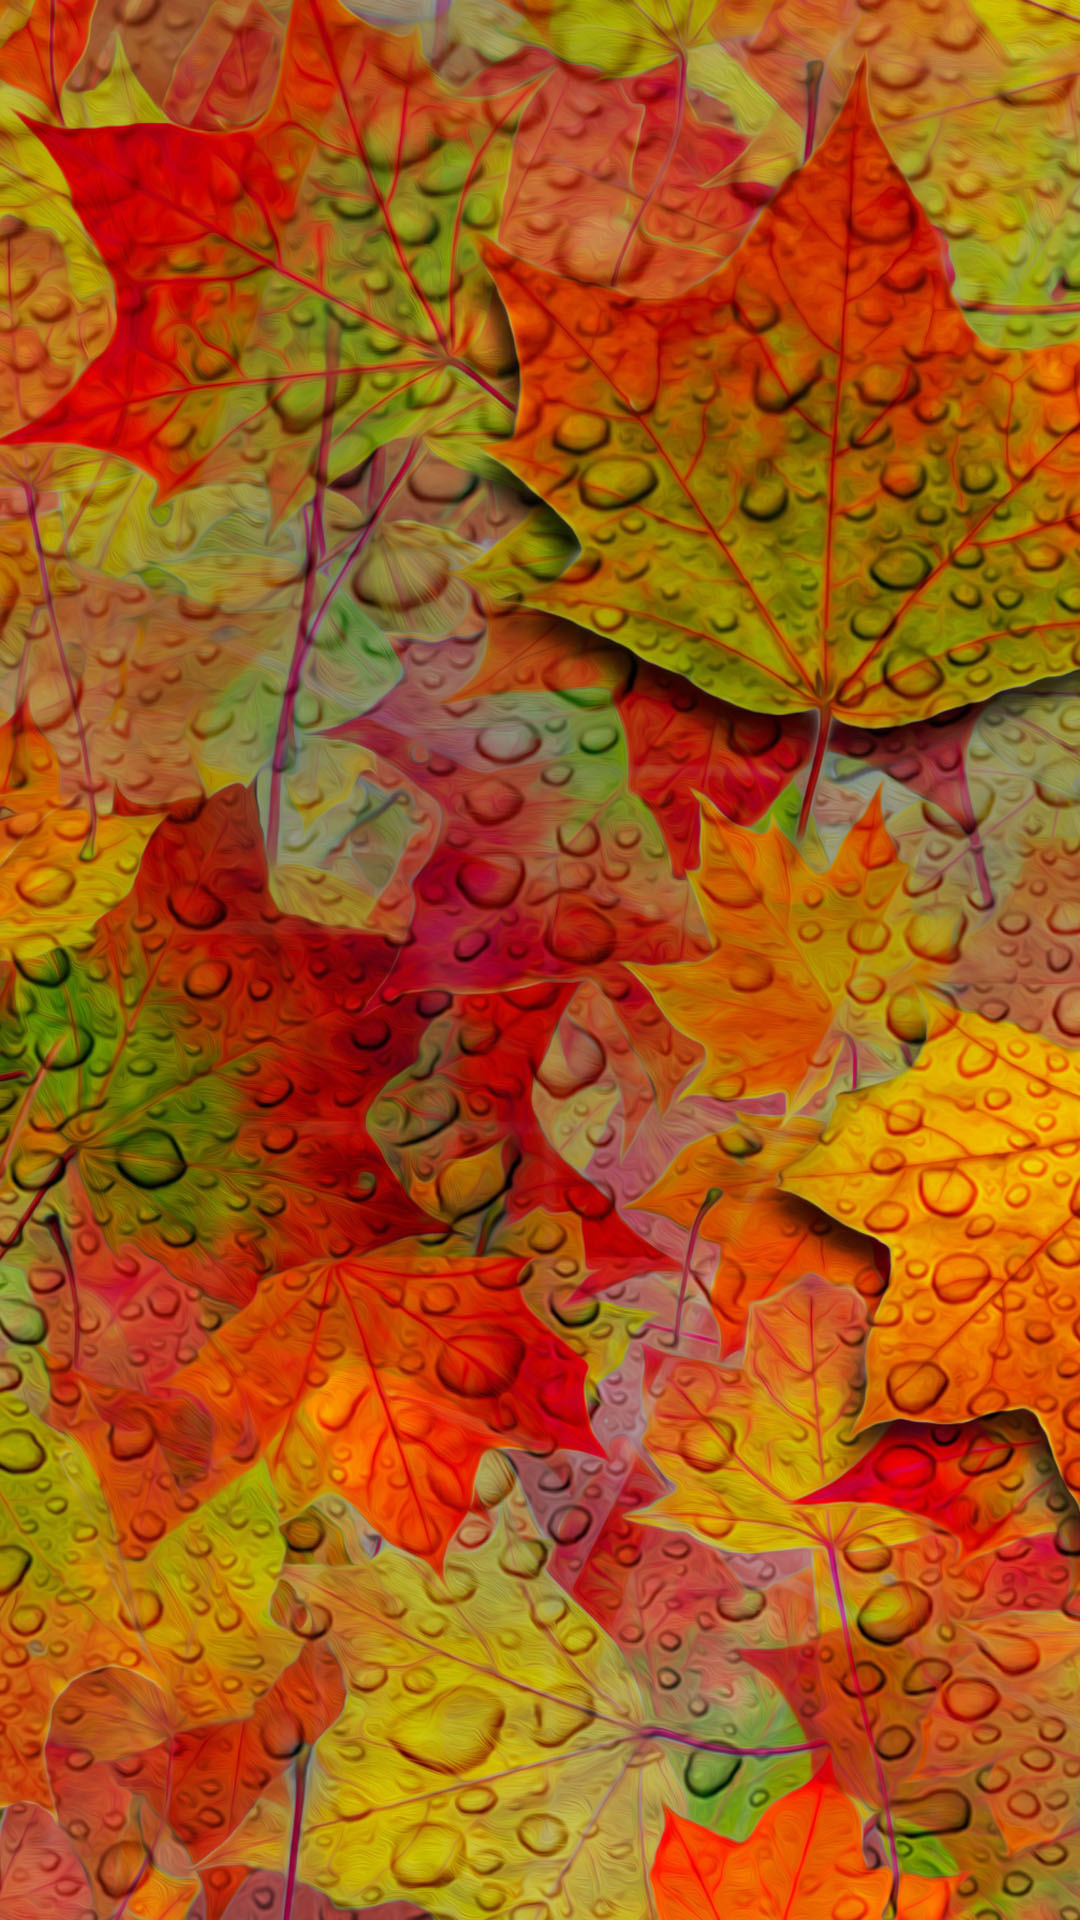 Fall Leaves Wallpaper iPhone